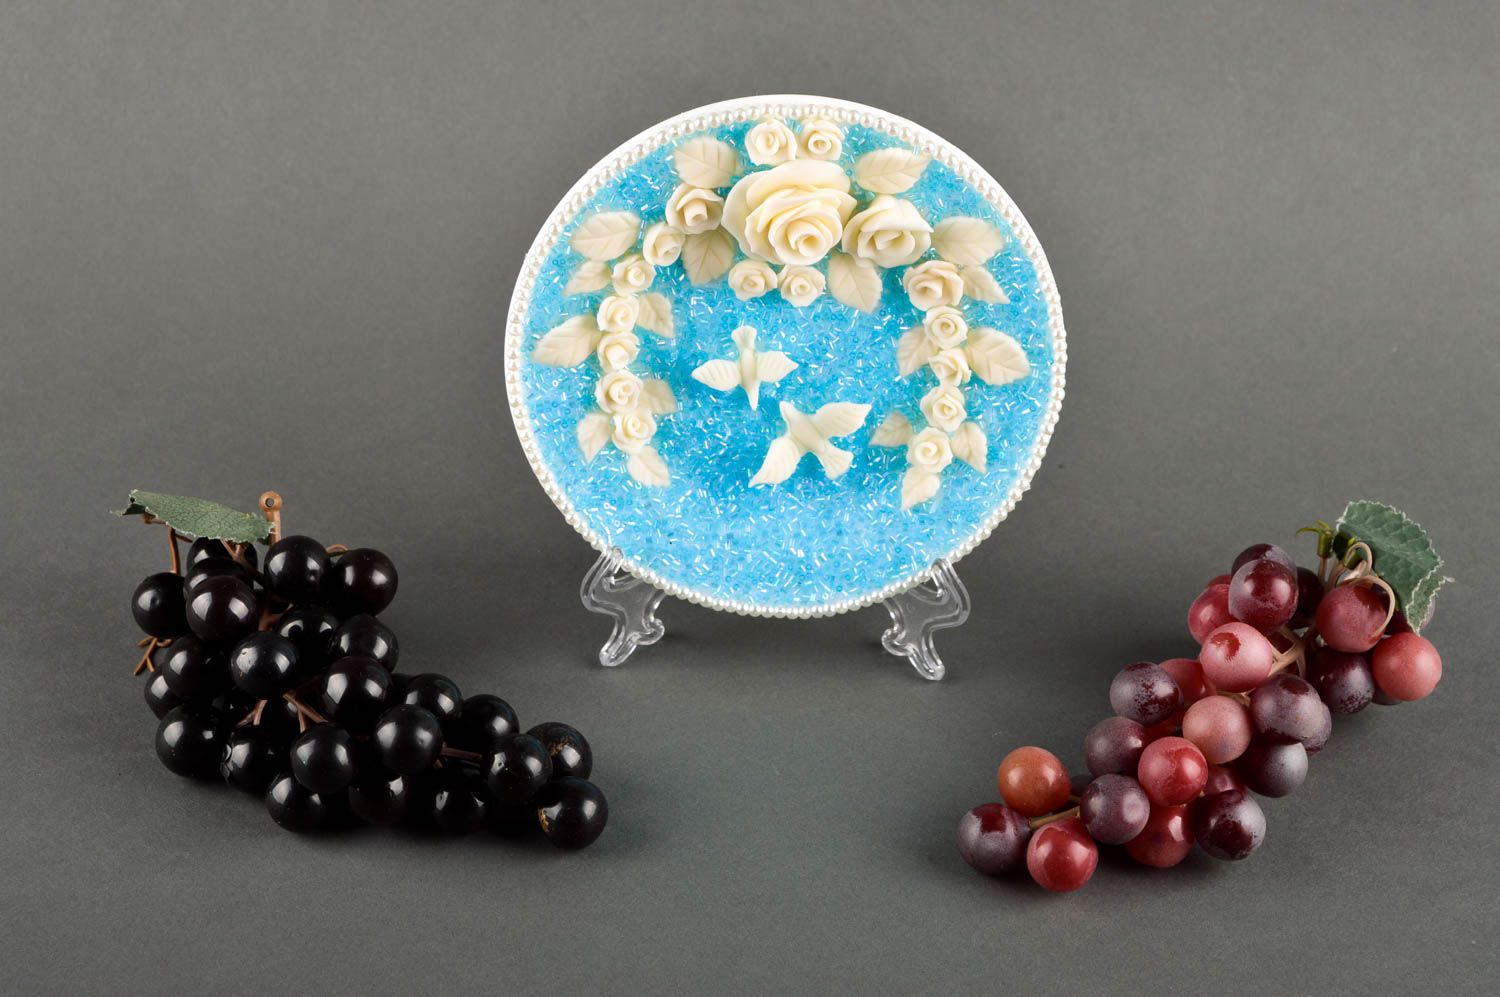 Свадебная тарелка хэнд мэйд посуда на свадьбу красивая посуда голубая тарелка фото 1